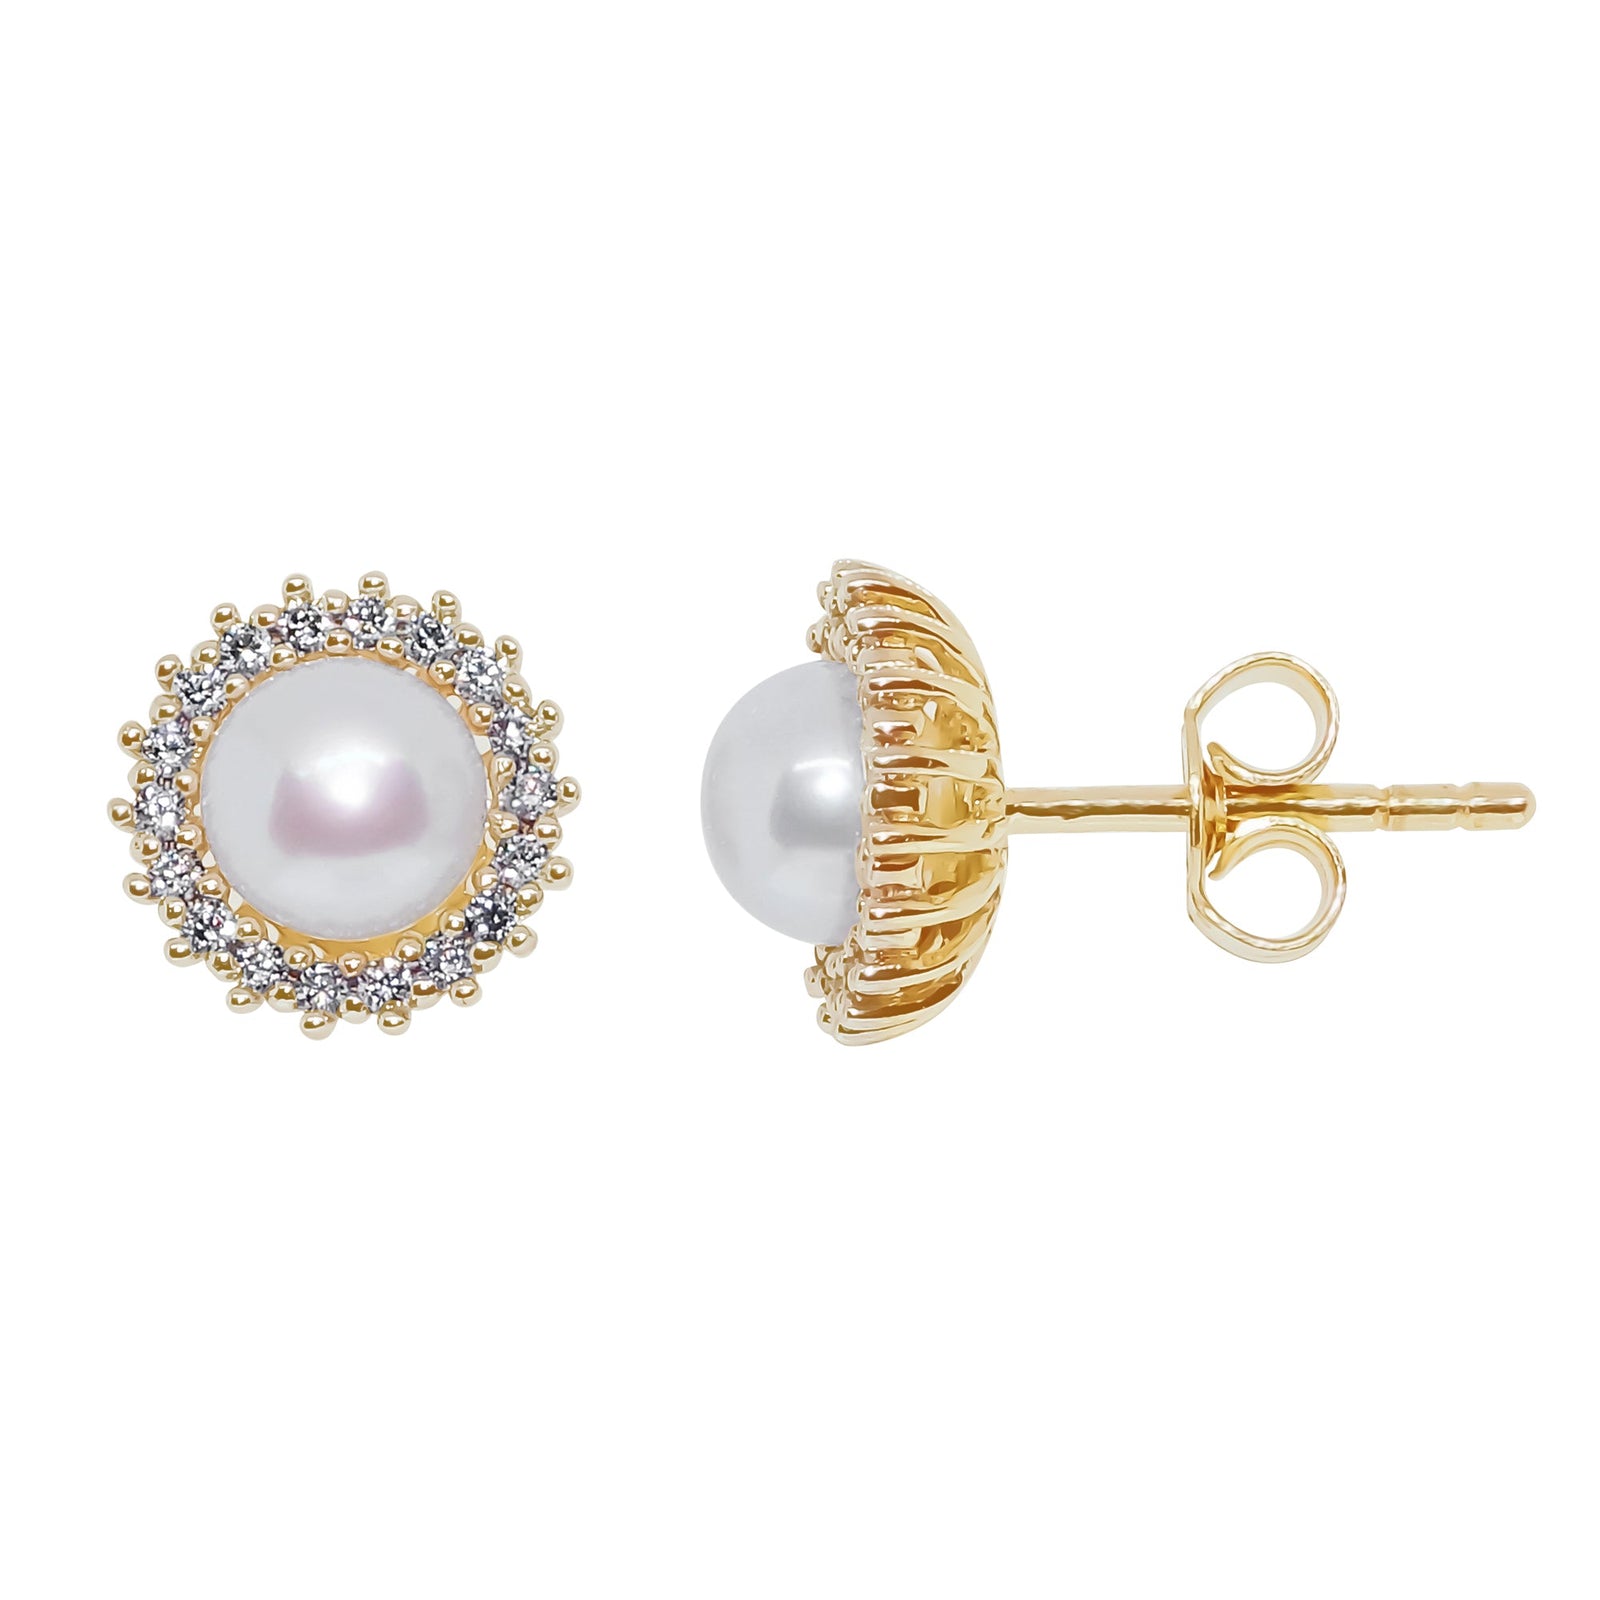 9ct gold 5mm freshwater pearl & cz stud earrings